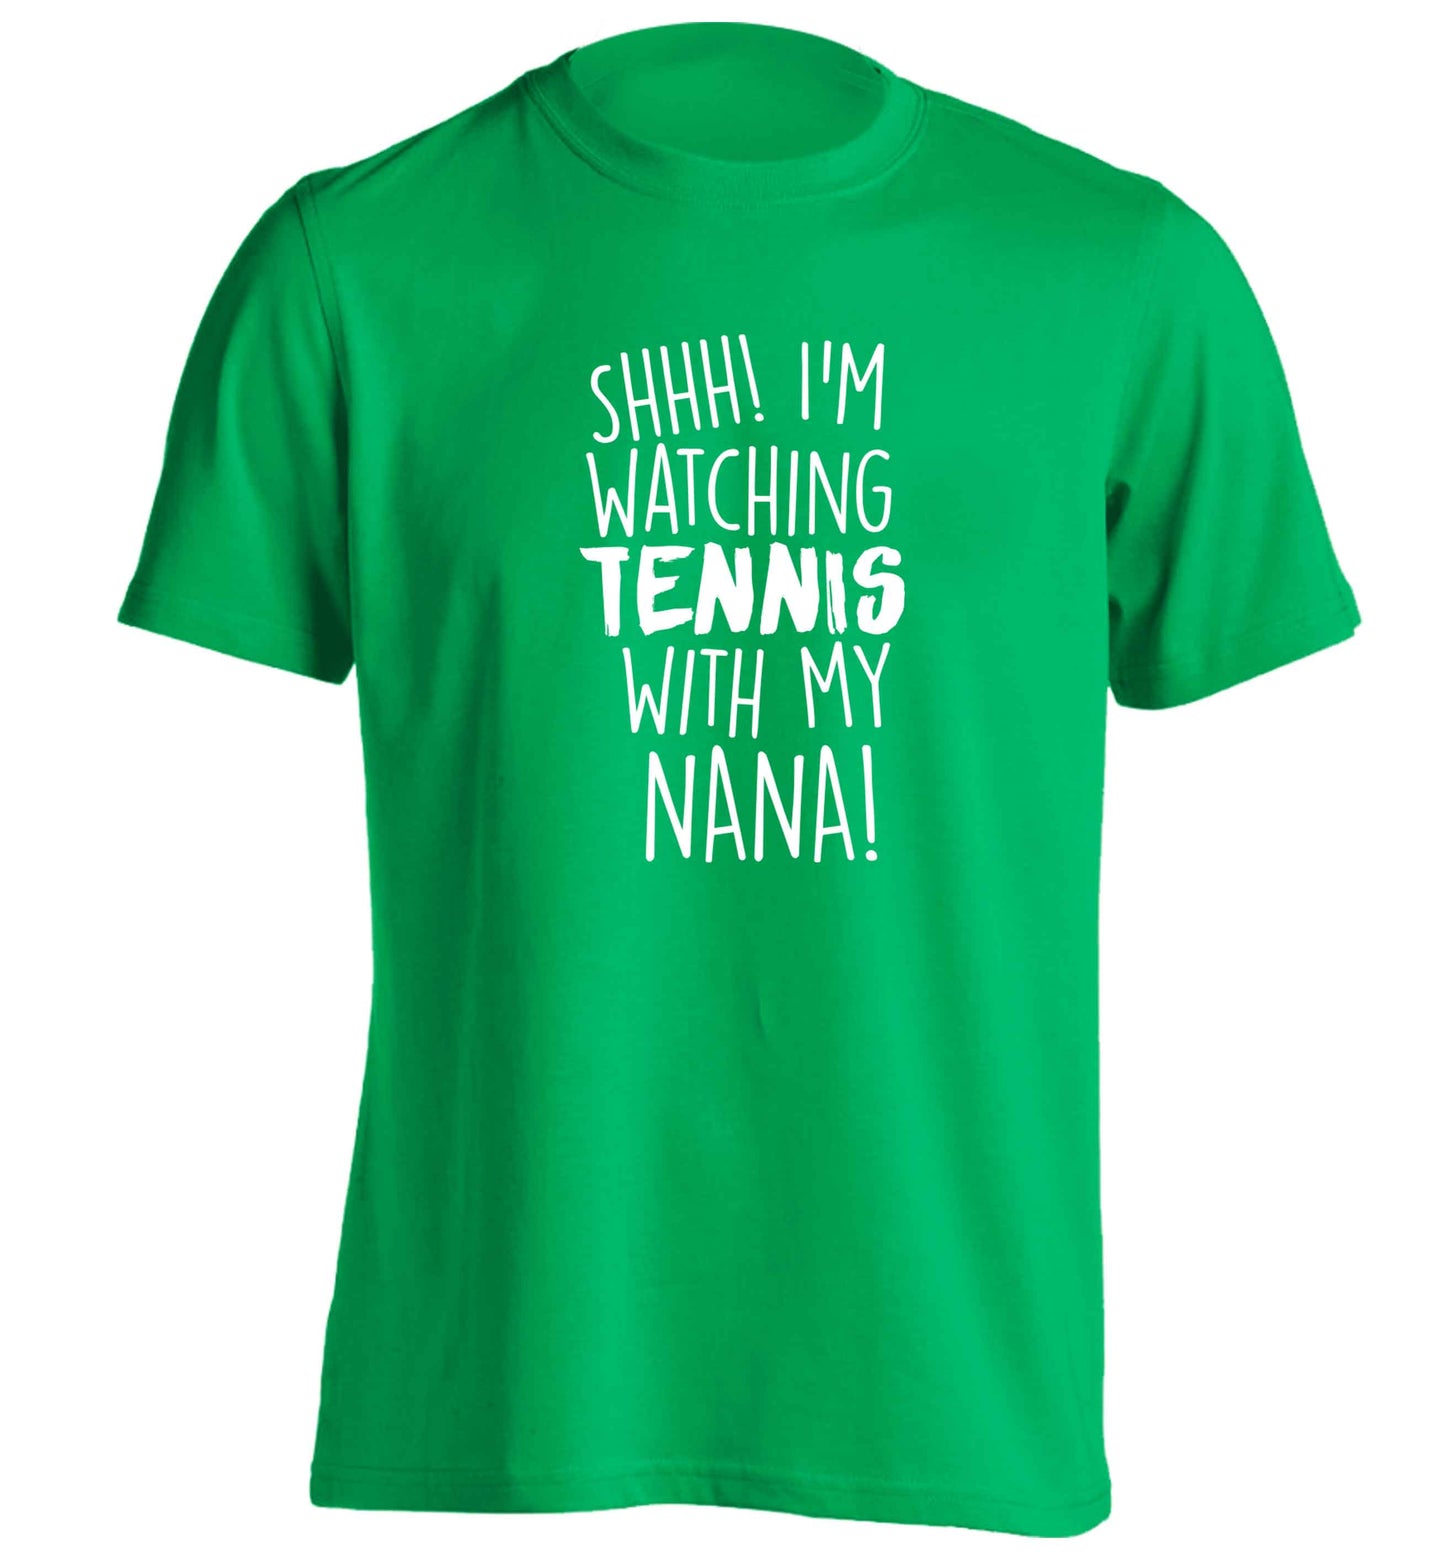 Shh! I'm watching tennis with my nana! adults unisex green Tshirt 2XL